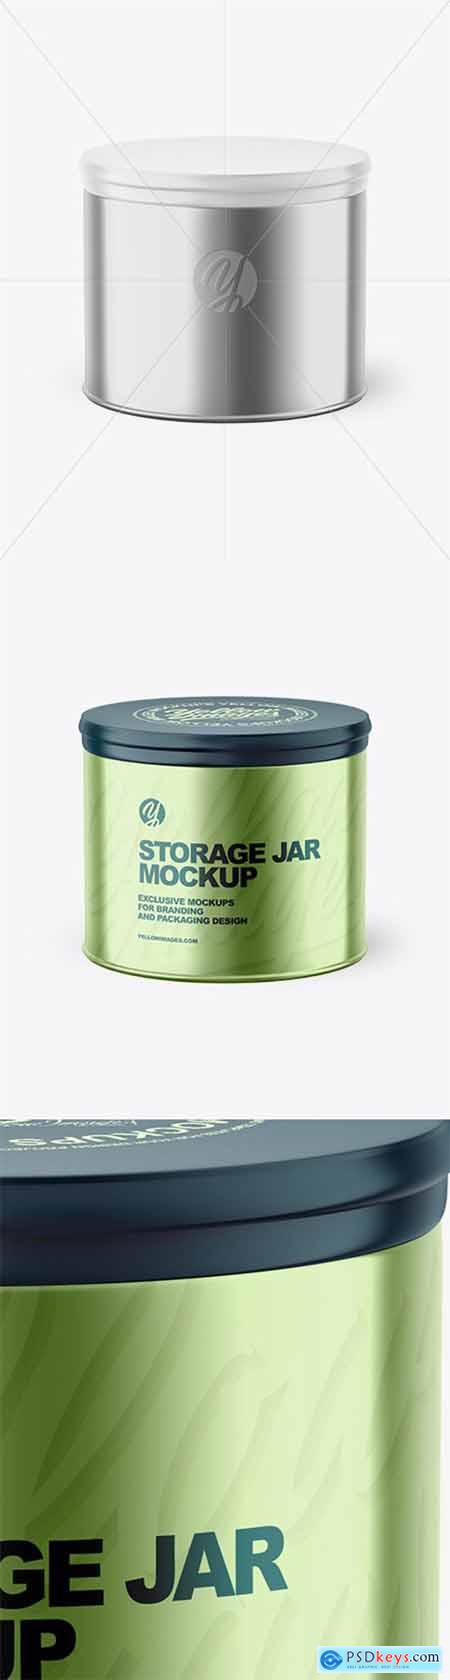 Metalliс Storage Jar Mockup 80369